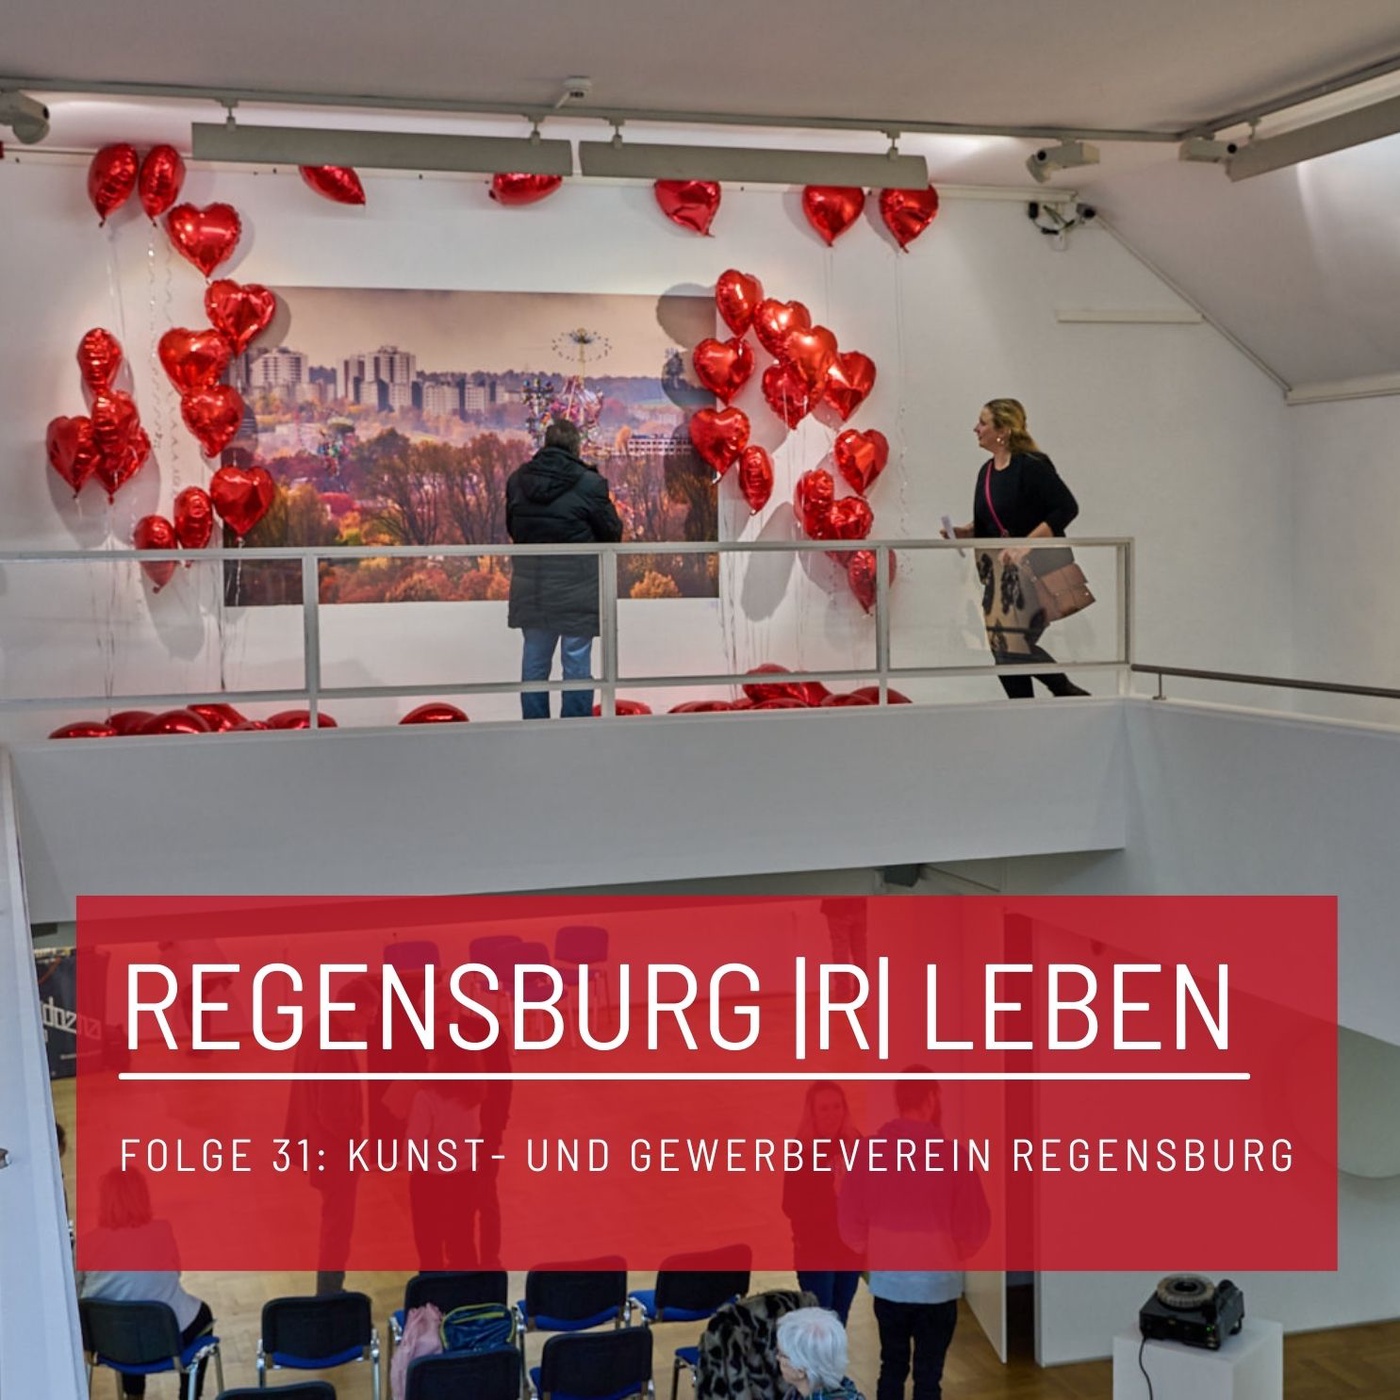 REGENSBURG |R| LEBEN - Folge 31 - Kunst- und Gewerbeverein Regensburg e.V.